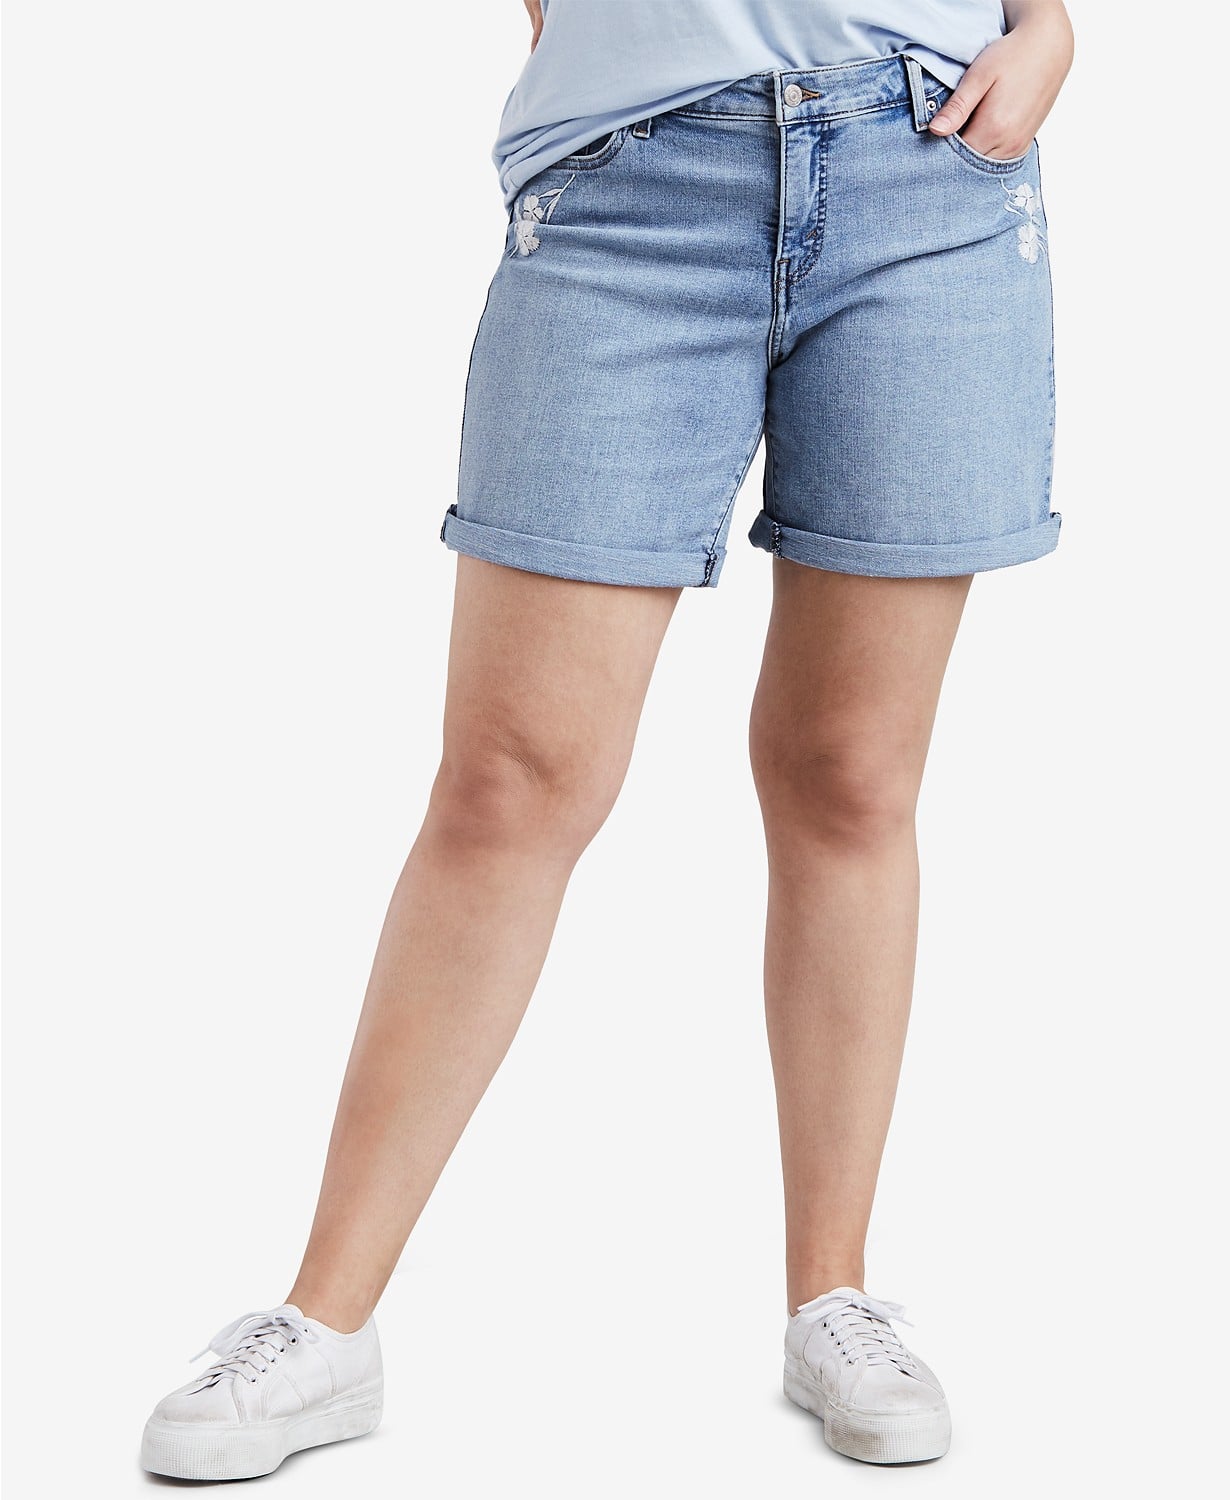 Levi's Cotton Roll-Cuff Denim Shorts | Miley Cyrus's Legs Go on For Dayyyys  — Maybe Even Years — in These Denim Shorts | POPSUGAR Fashion Photo 14